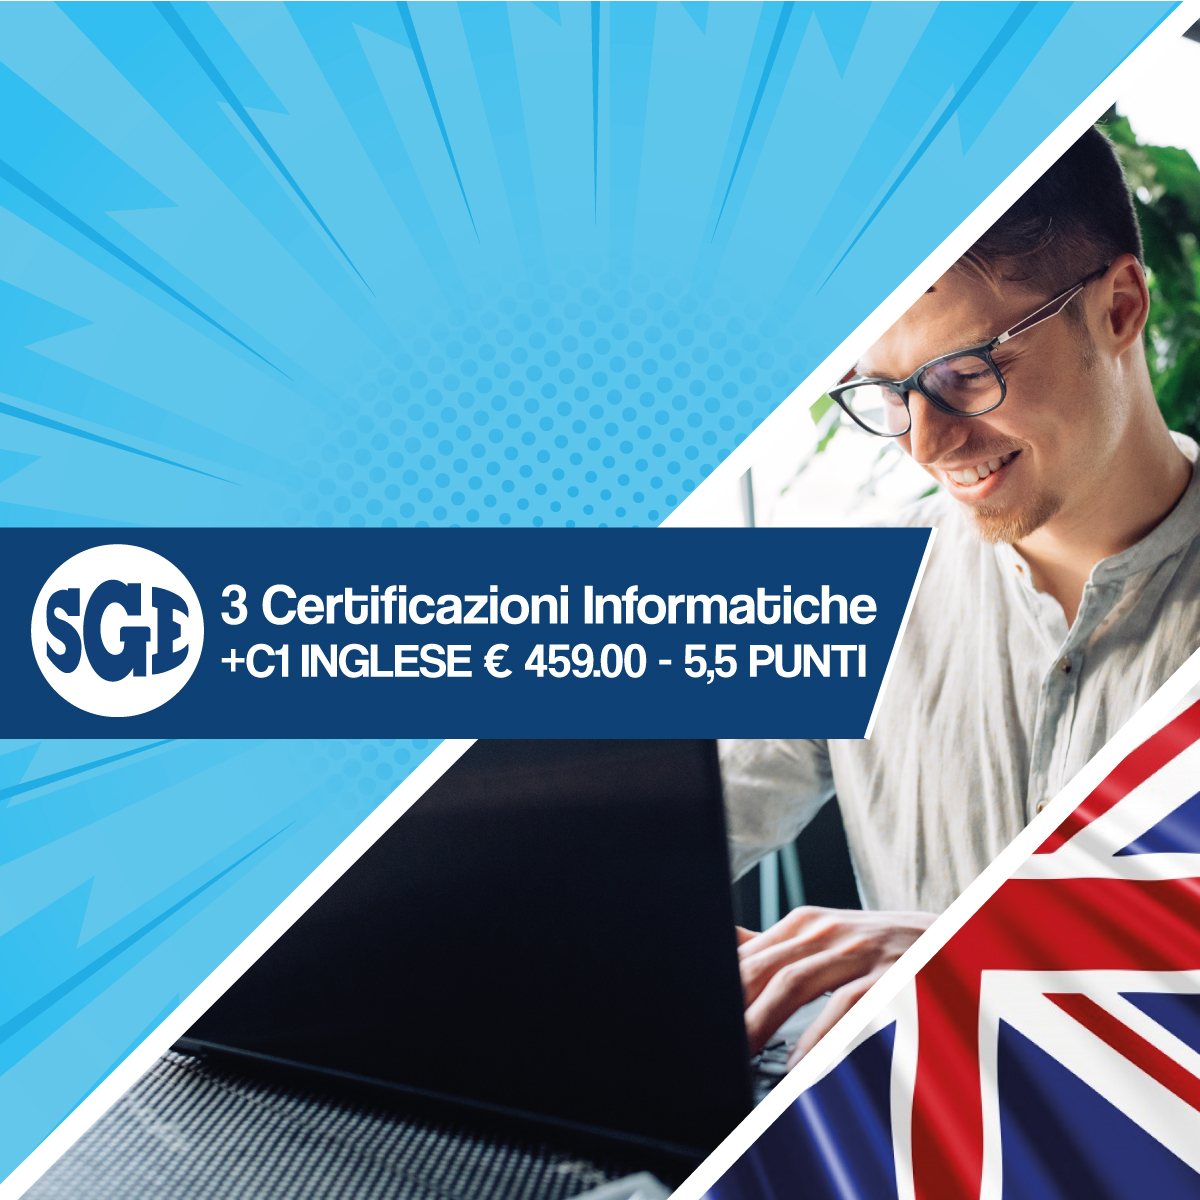 4 Certificazioni Informatiche +C1 INGLESE €459.00 - 6 PUNTI